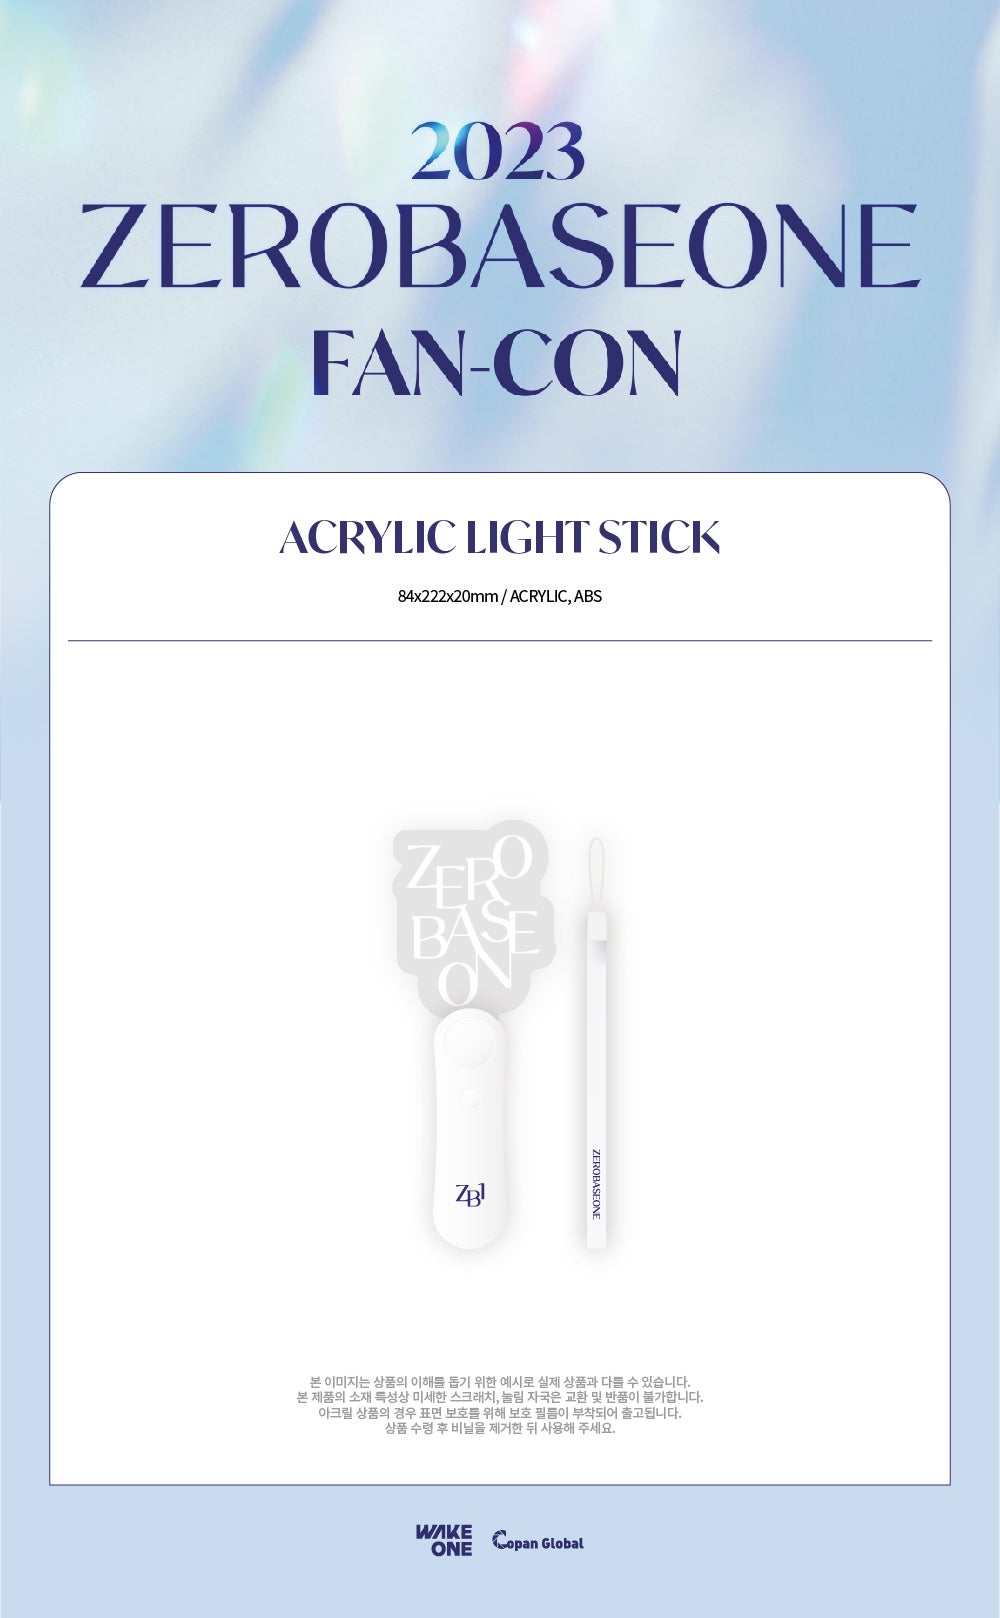 ZEROBASEONE - Acrylic Light Stick [2023 FAN-CON OFFICIAL MD]